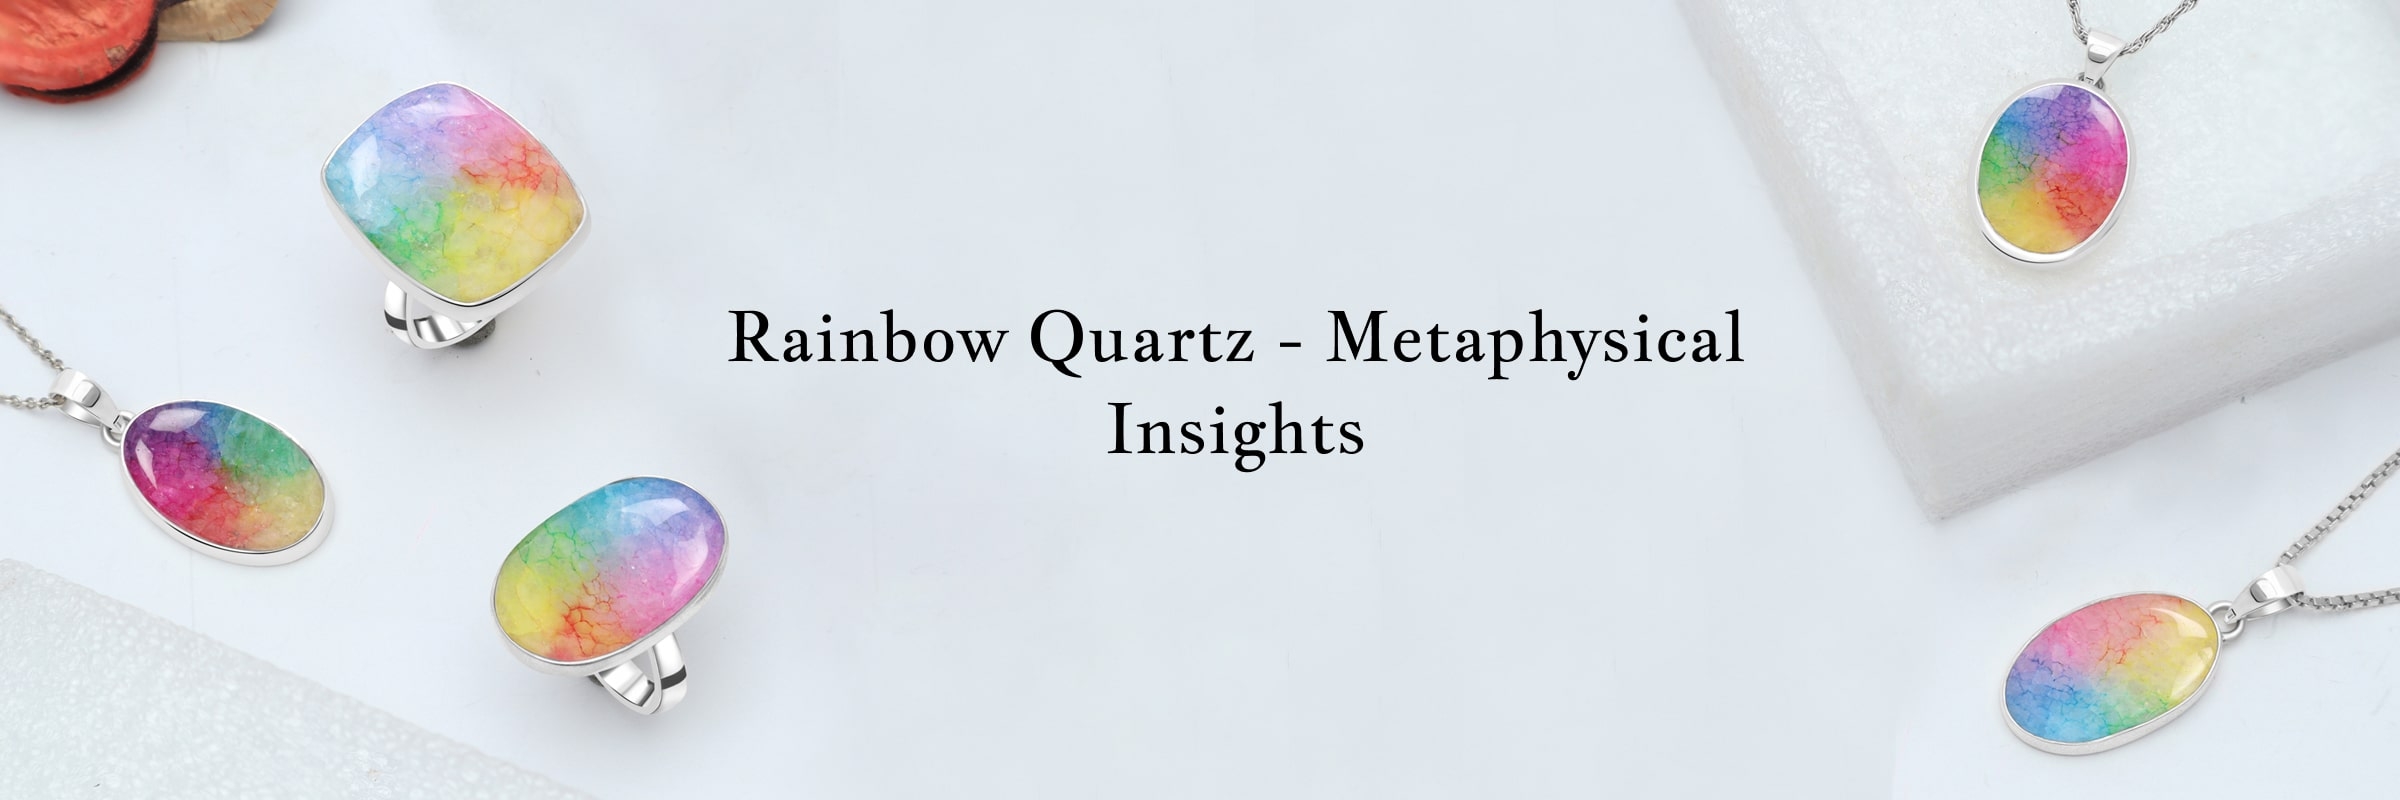 Metaphysical Properties of Rainbow Quartz